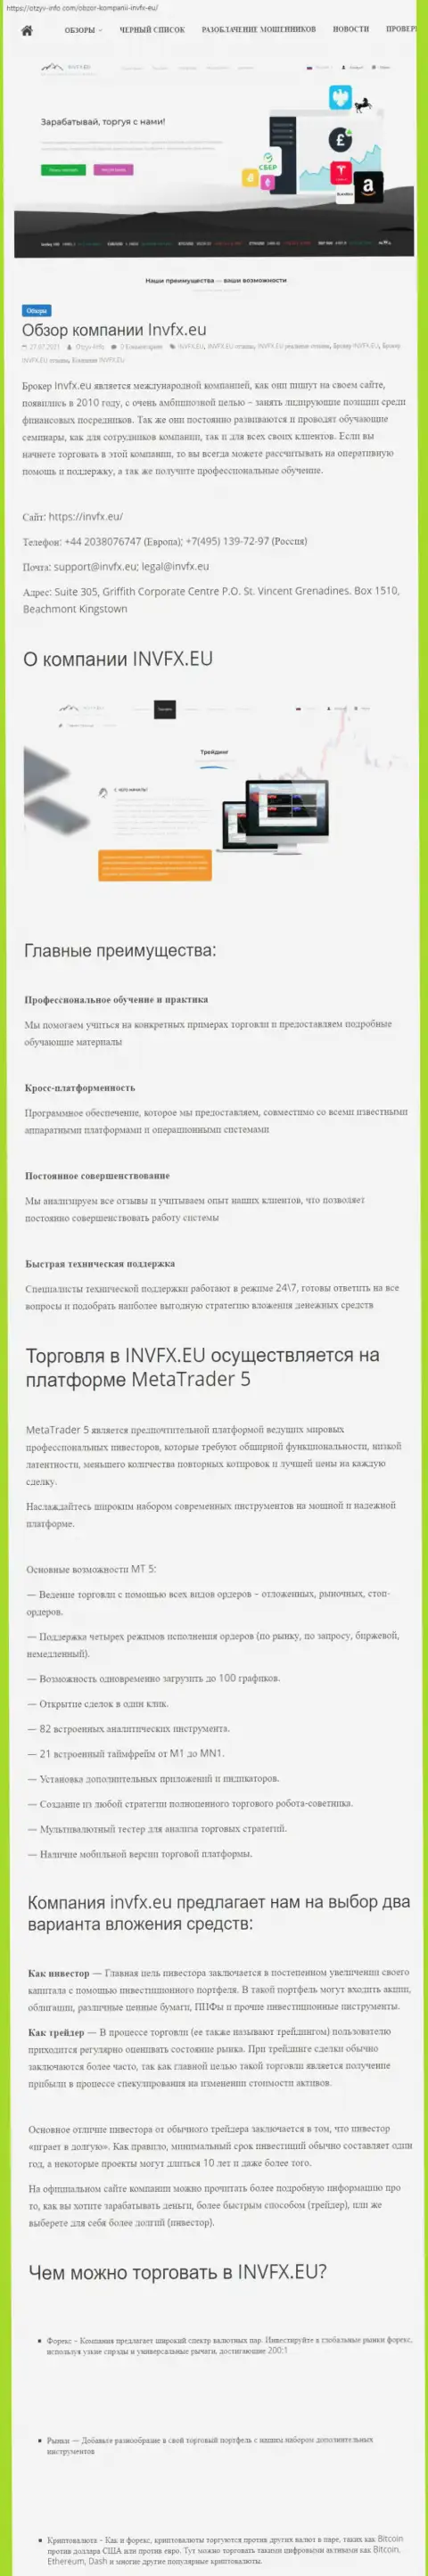 Веб-портал otzyv-info com опубликовал публикацию об Форекс-организации INVFX